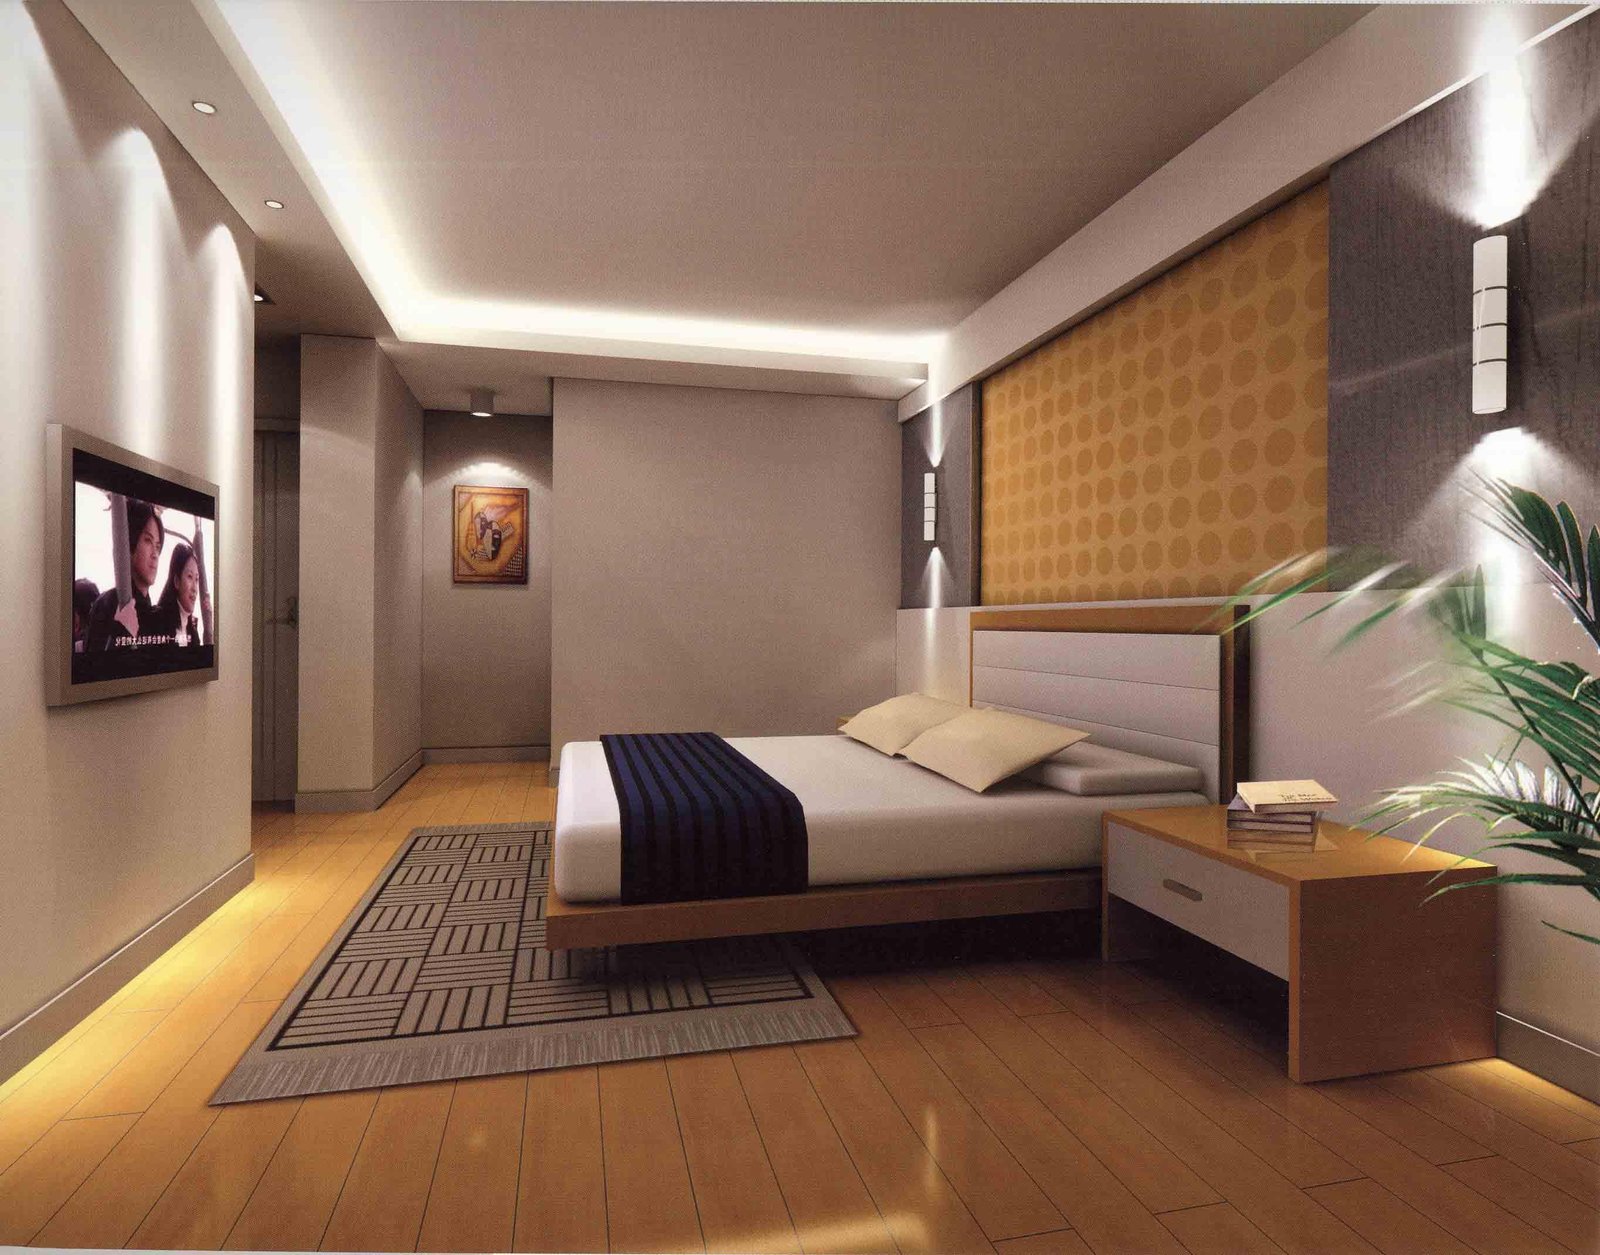 Cool Master Bedroom Decor